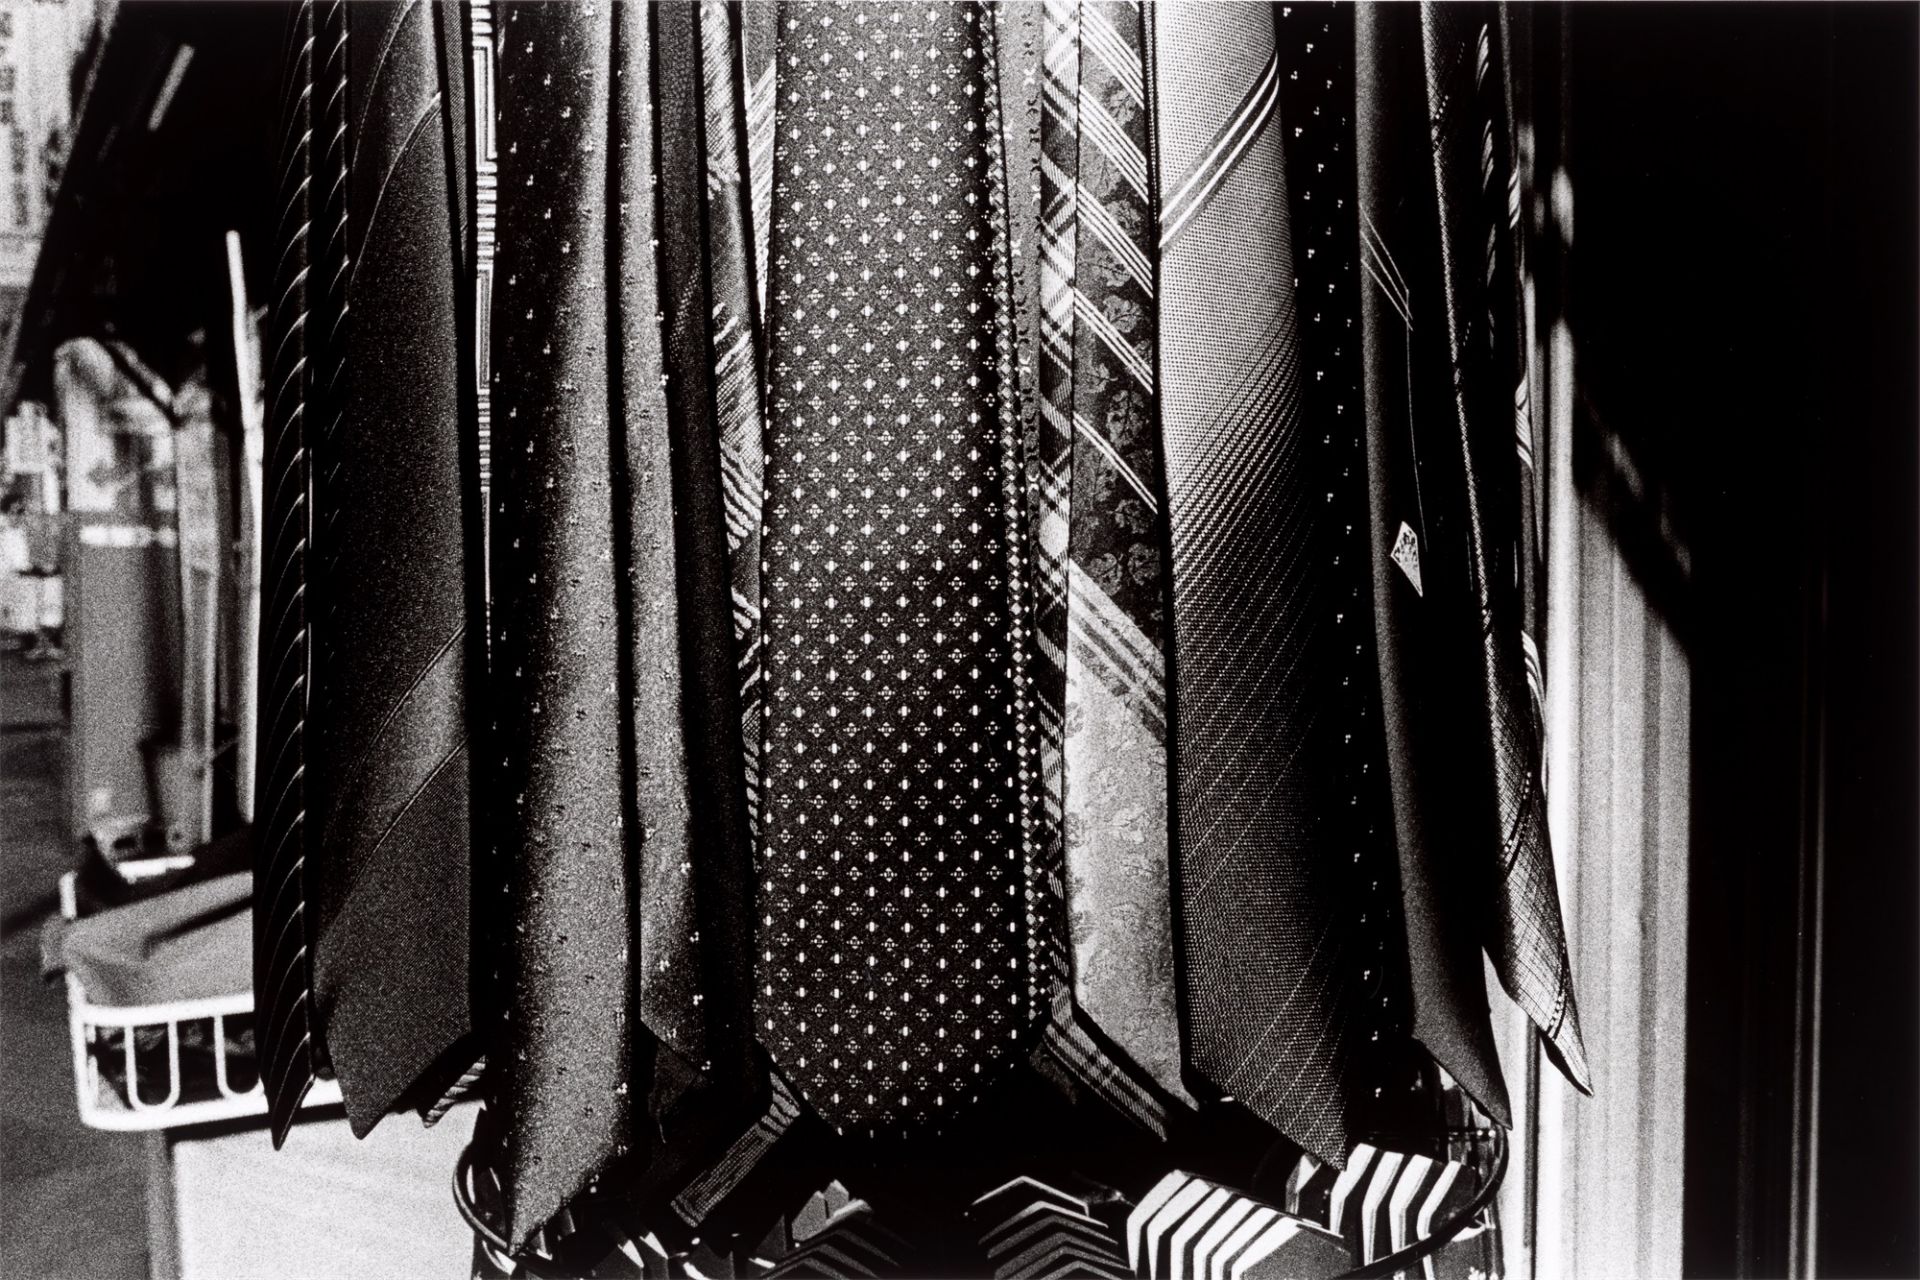 Daidō Moriyama. Neckties. 1982